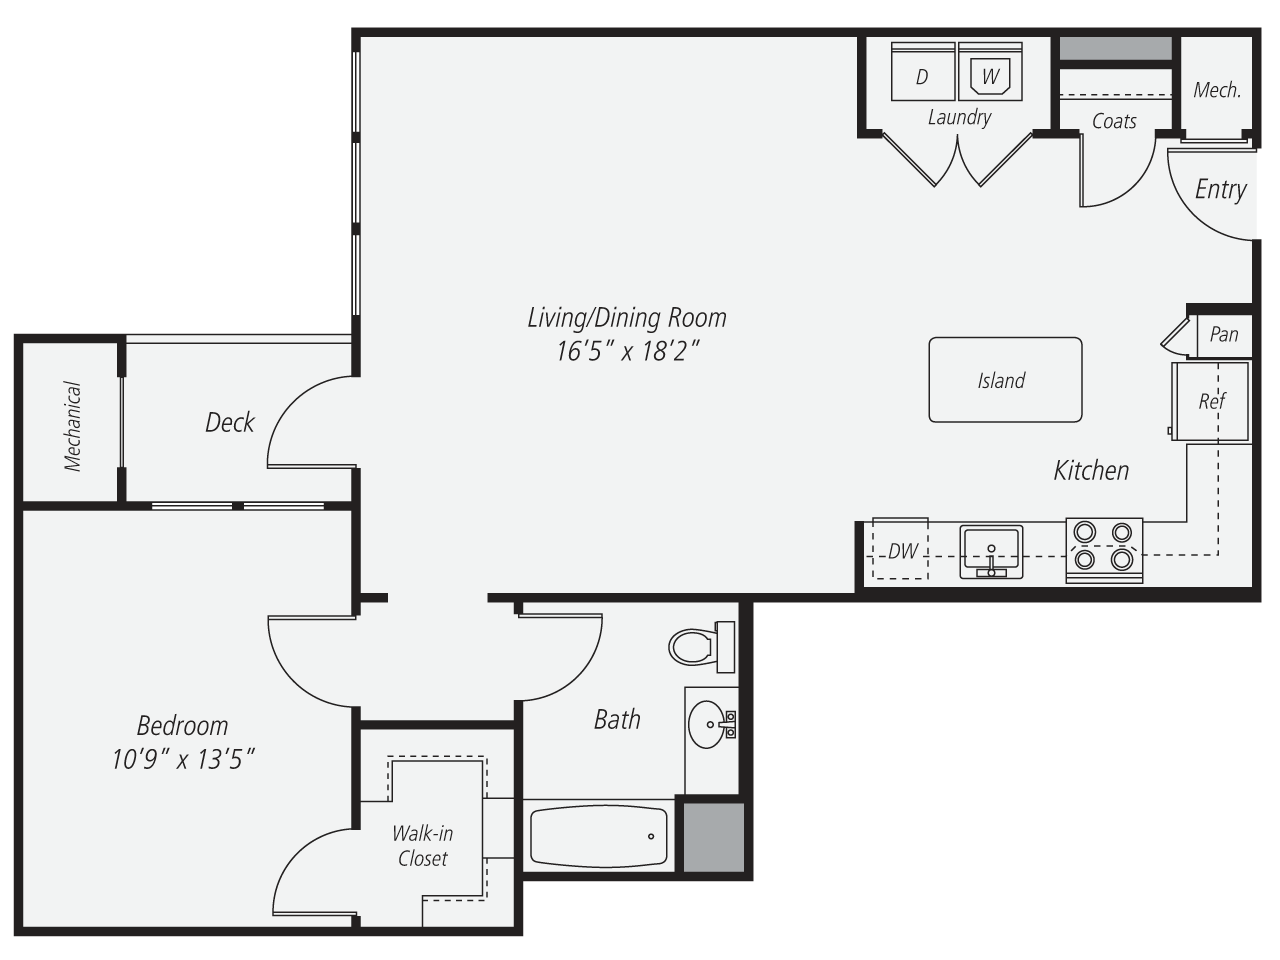 Floorplan for Apartment #147, 1 bedroom unit at Halstead Norwalk